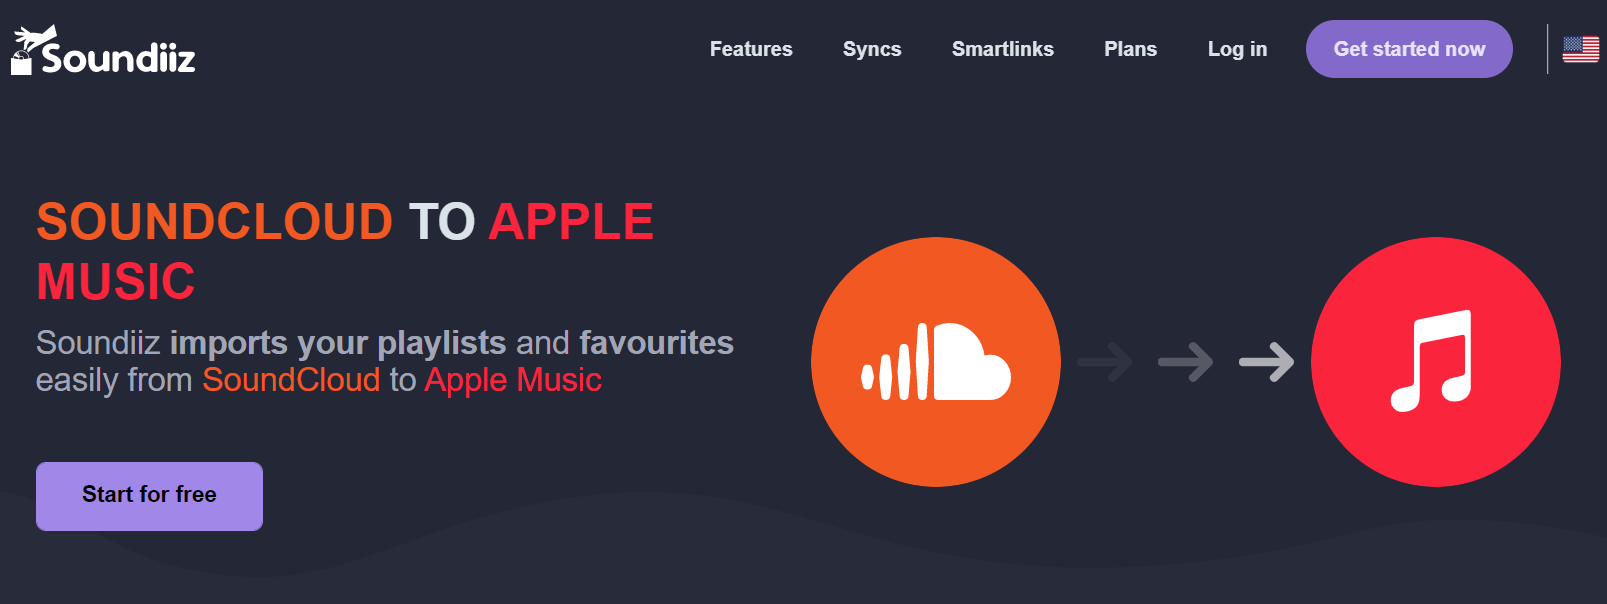 Apple MusicへのSoundiiz Soundcloud